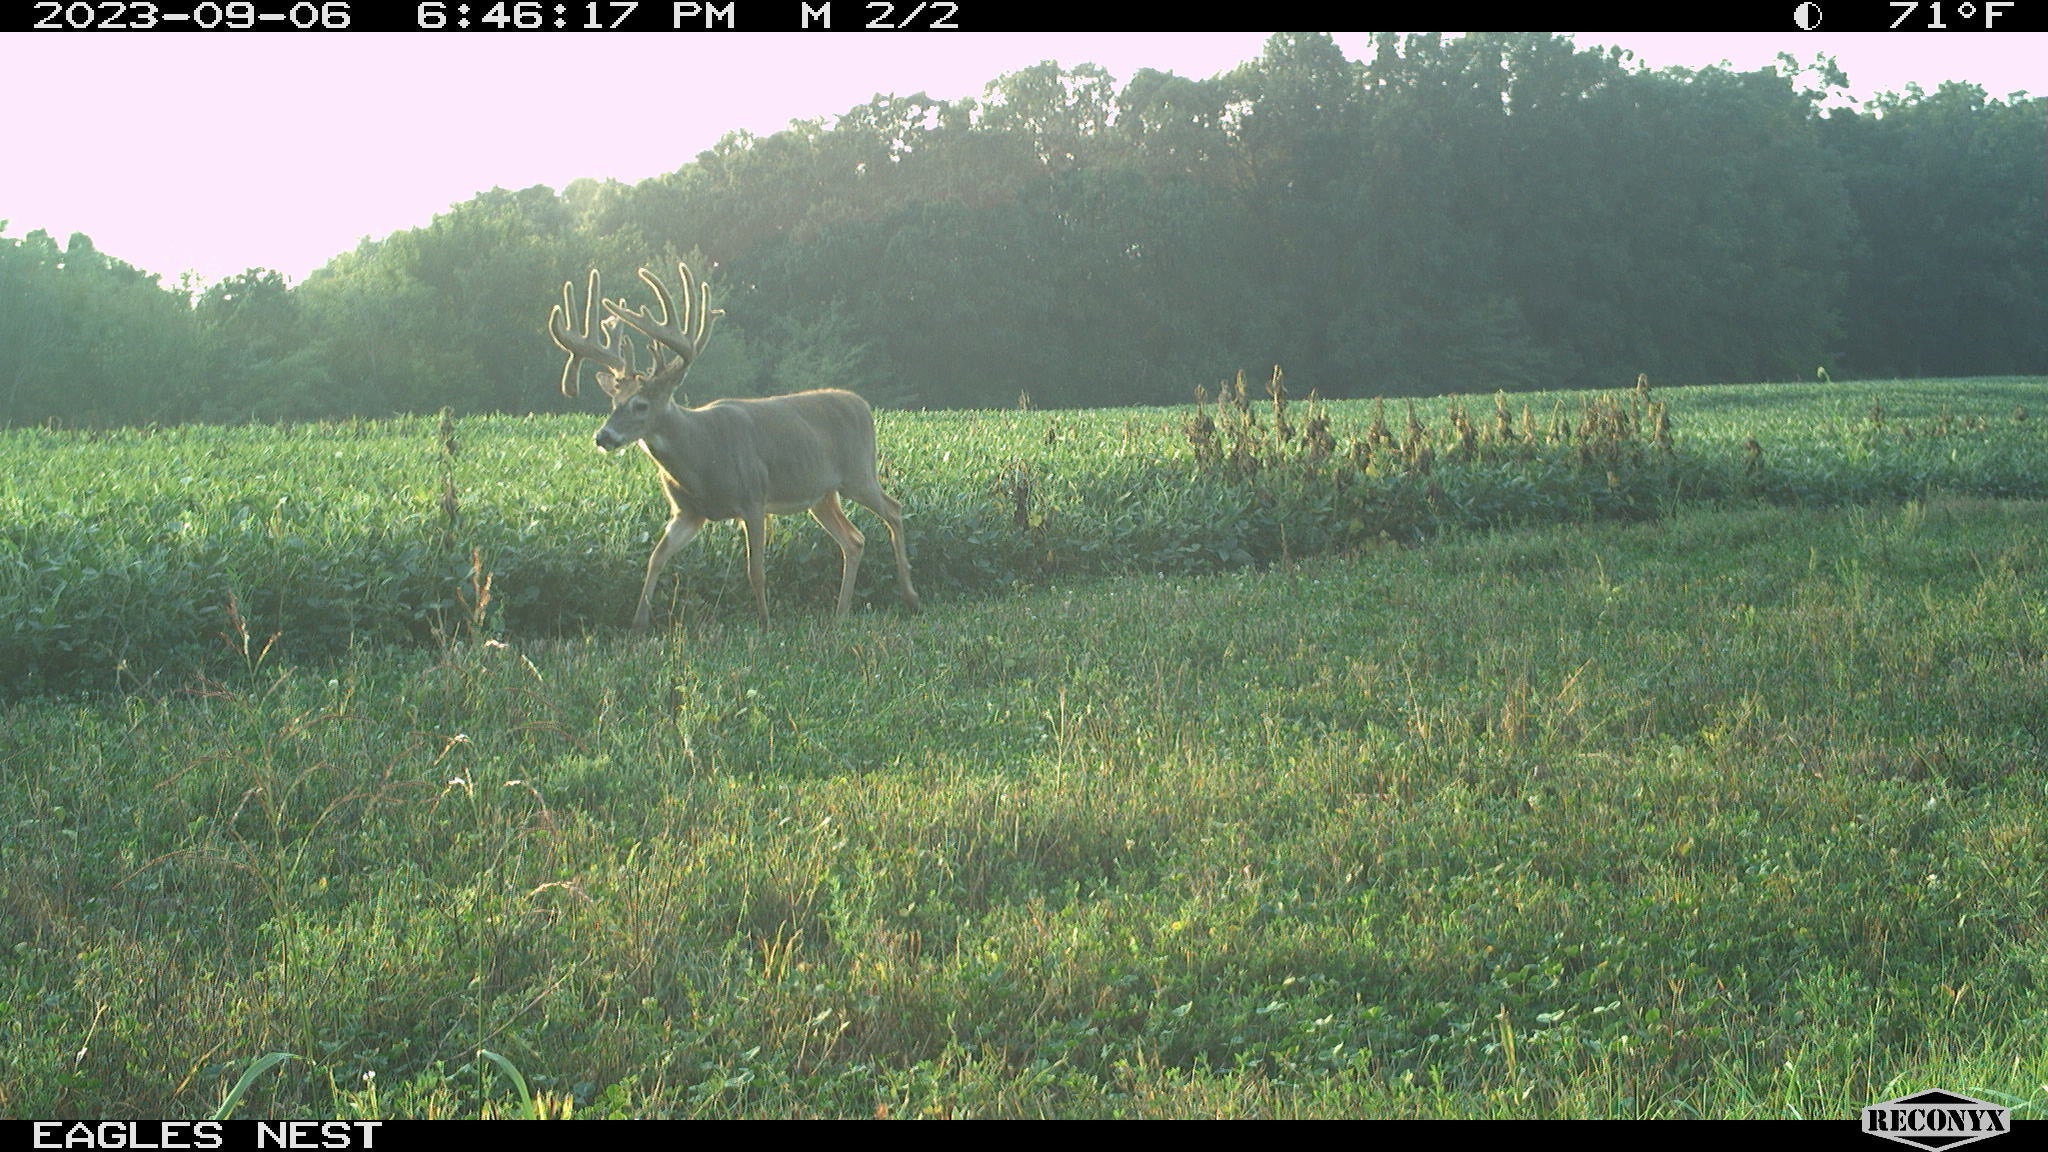 A daylight trail-camera photo show a huge Missouri buck walking along a soybean field.